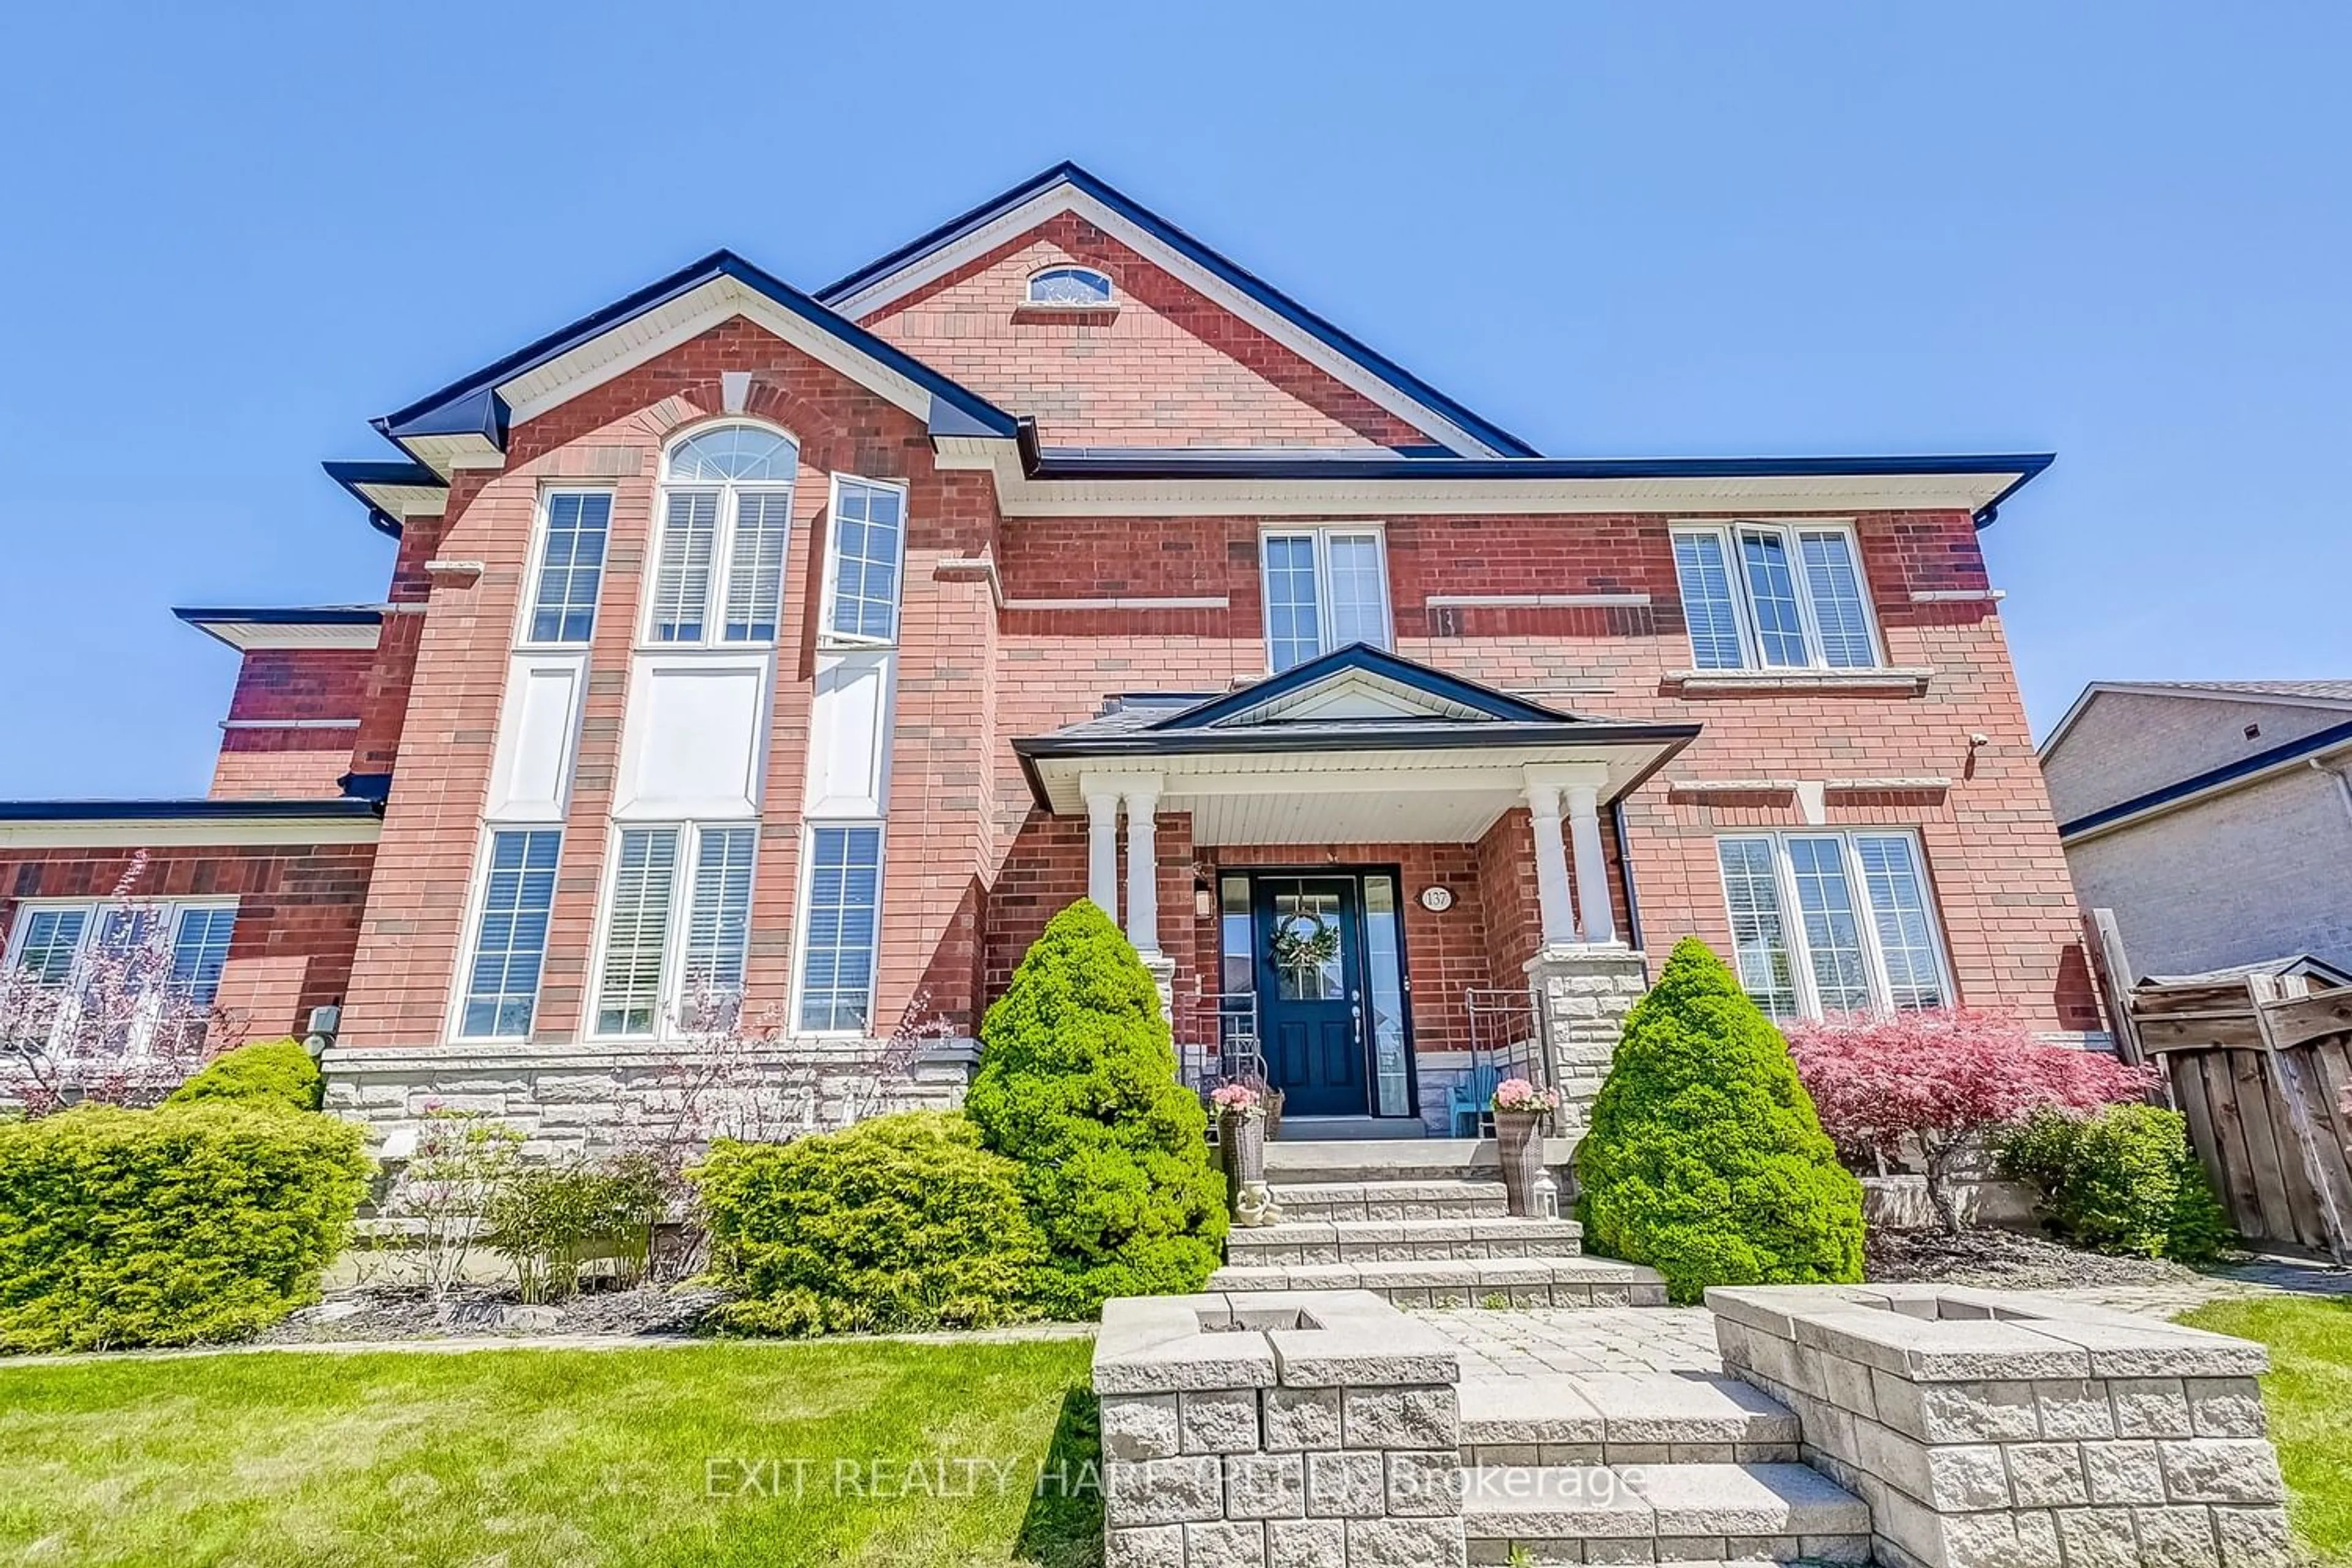 Home with brick exterior material for 137 Cedargrove Rd, Caledon Ontario L7E 2W9